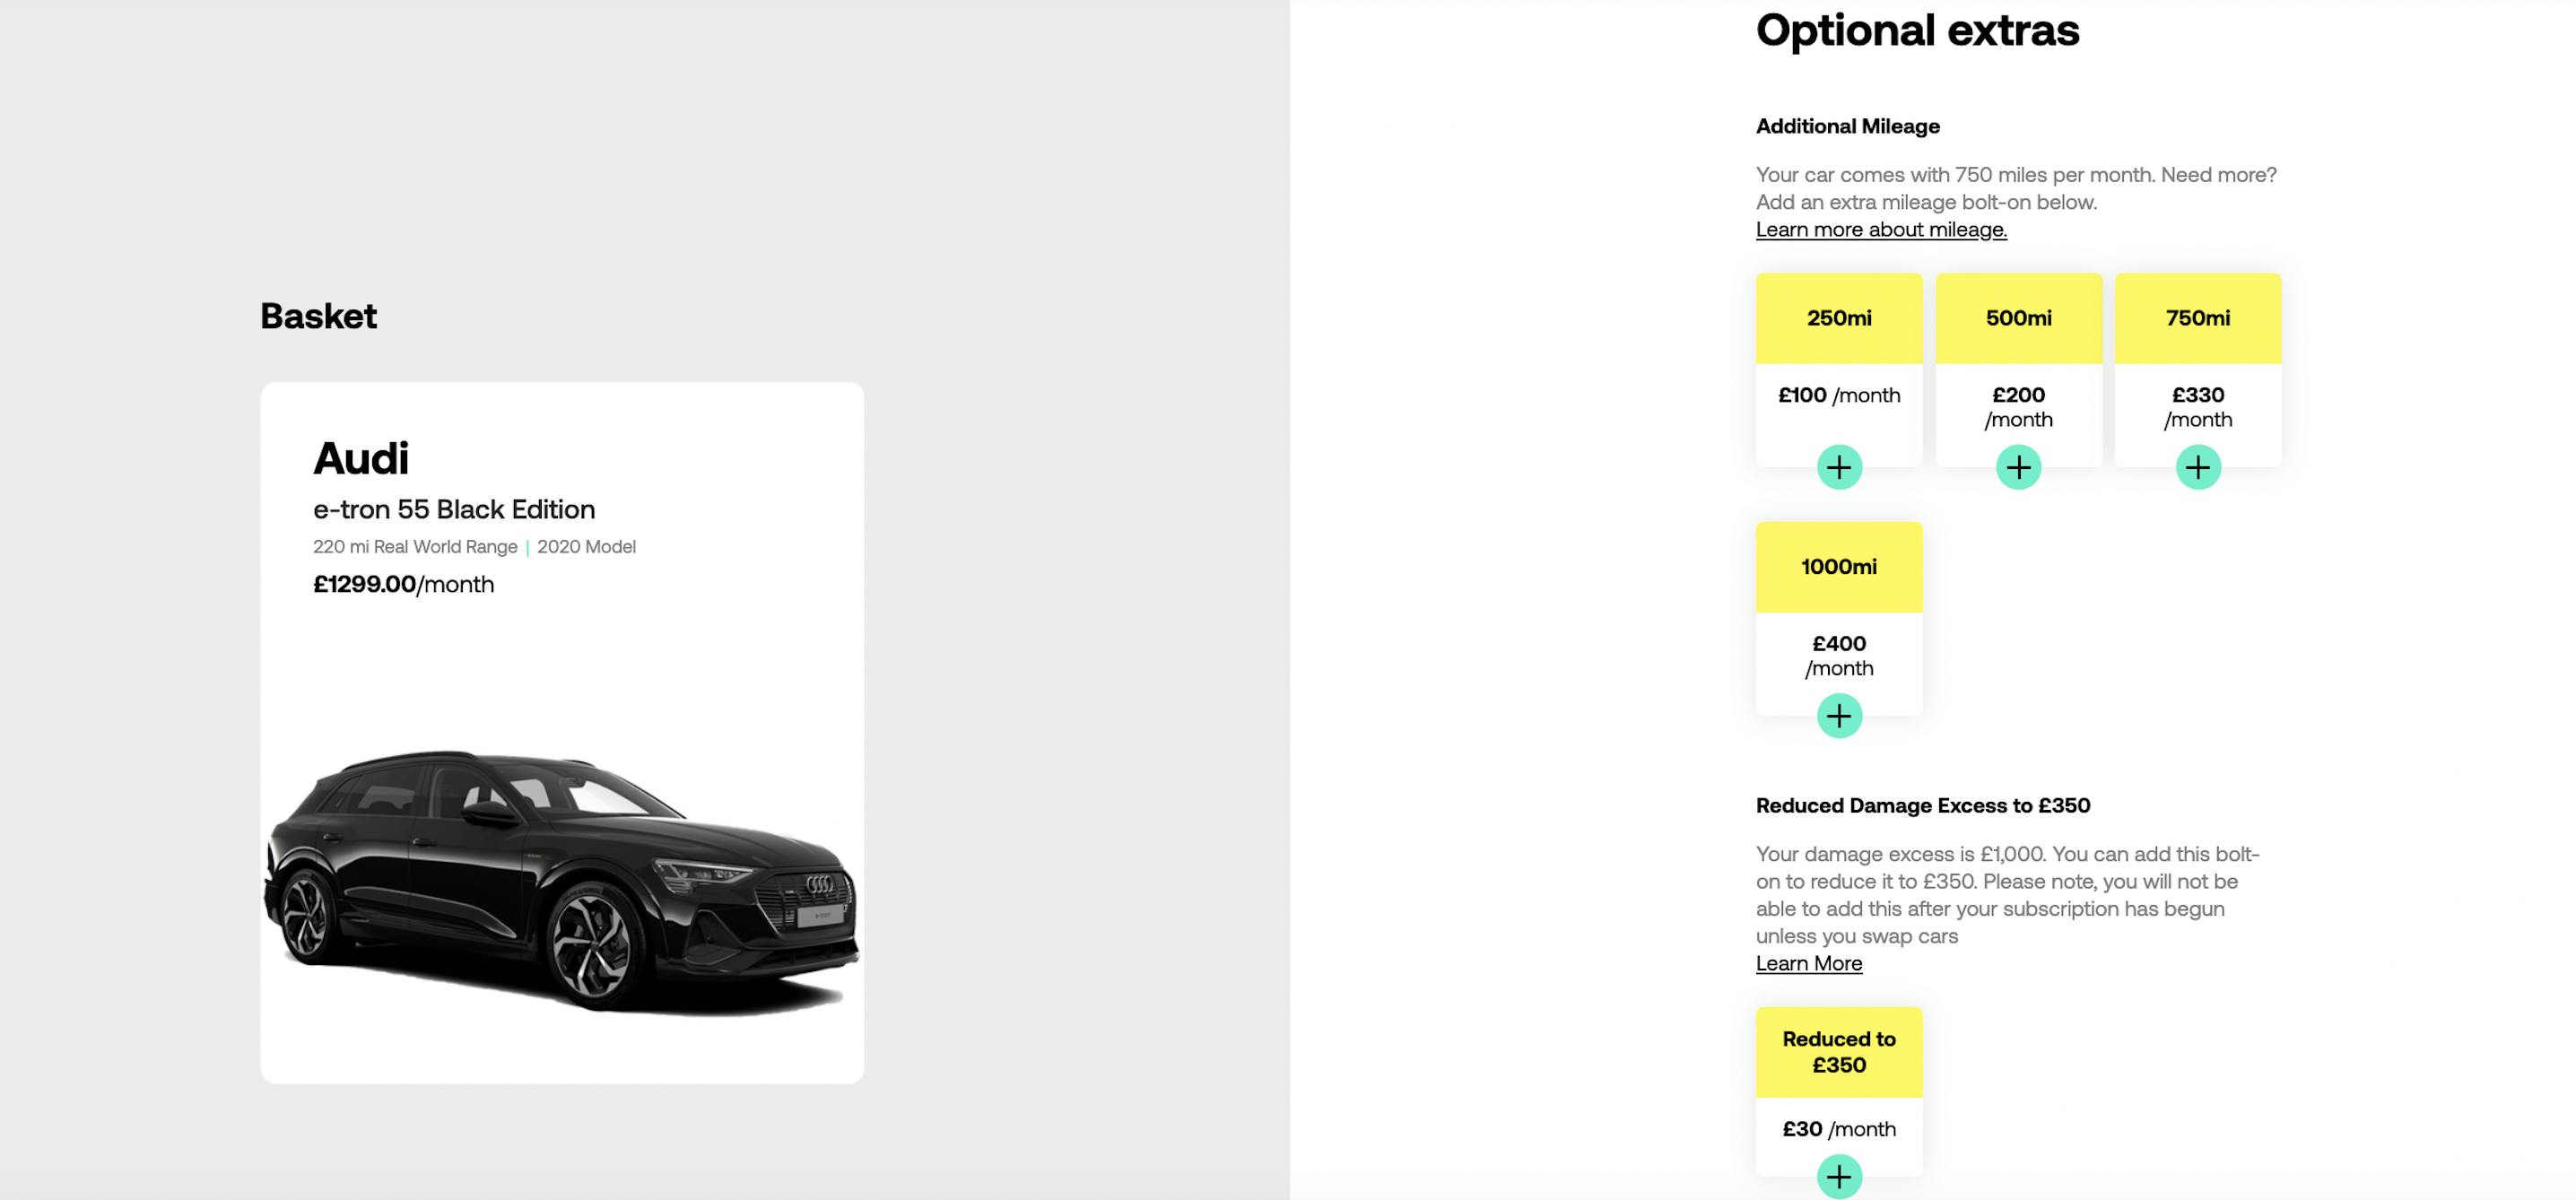 Audi e-tron electric car optional extras page